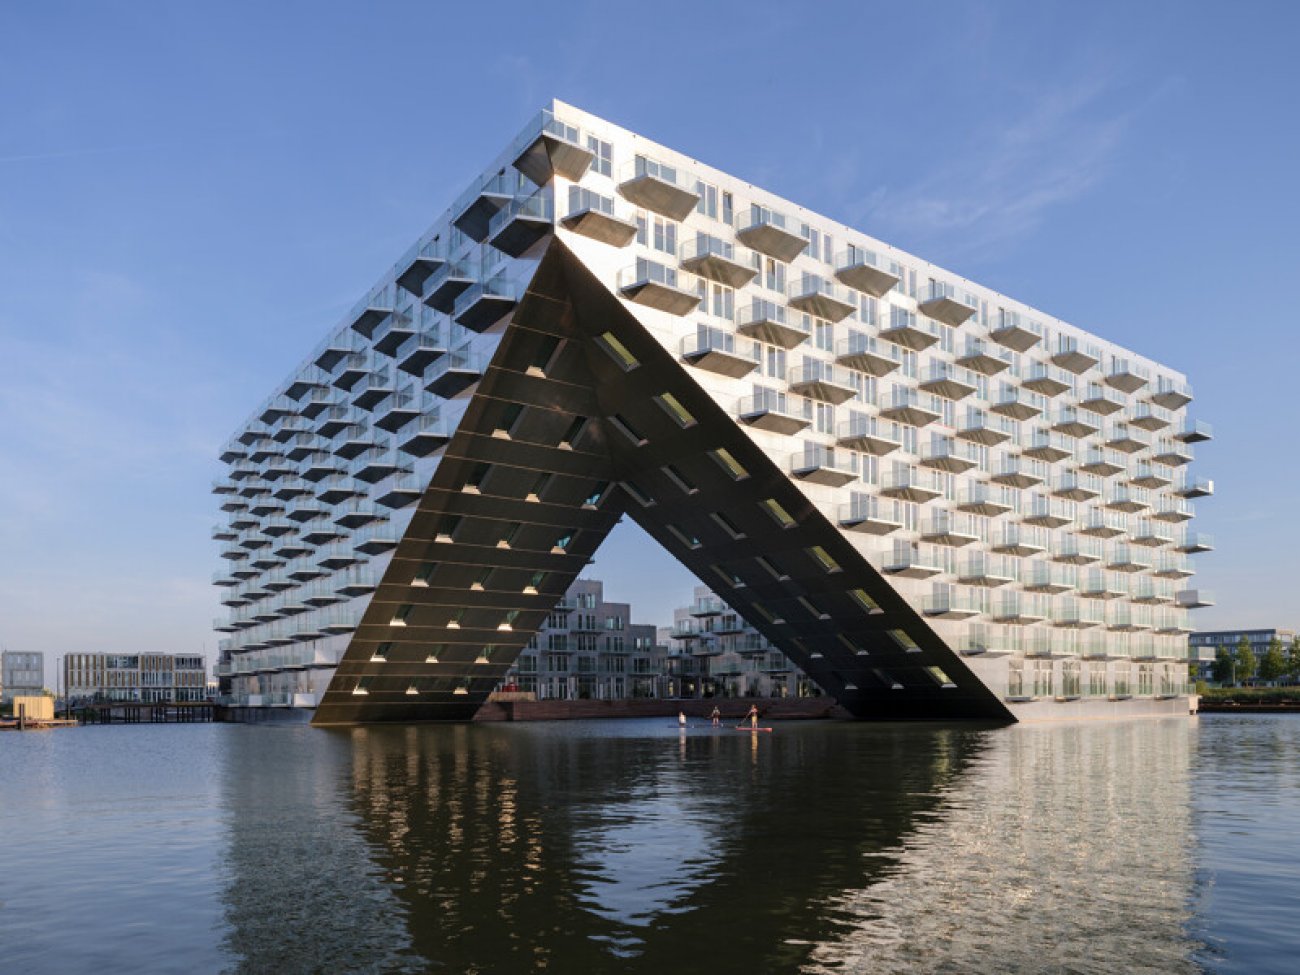 <strong>MEILLEUR PROJET RÉSIDENTIEL</strong><br>Sluishuis<br>Amsterdam, Pays-Bas<br>Architectes: Bjarke Ingels Group (BIG) & Barcode Architects